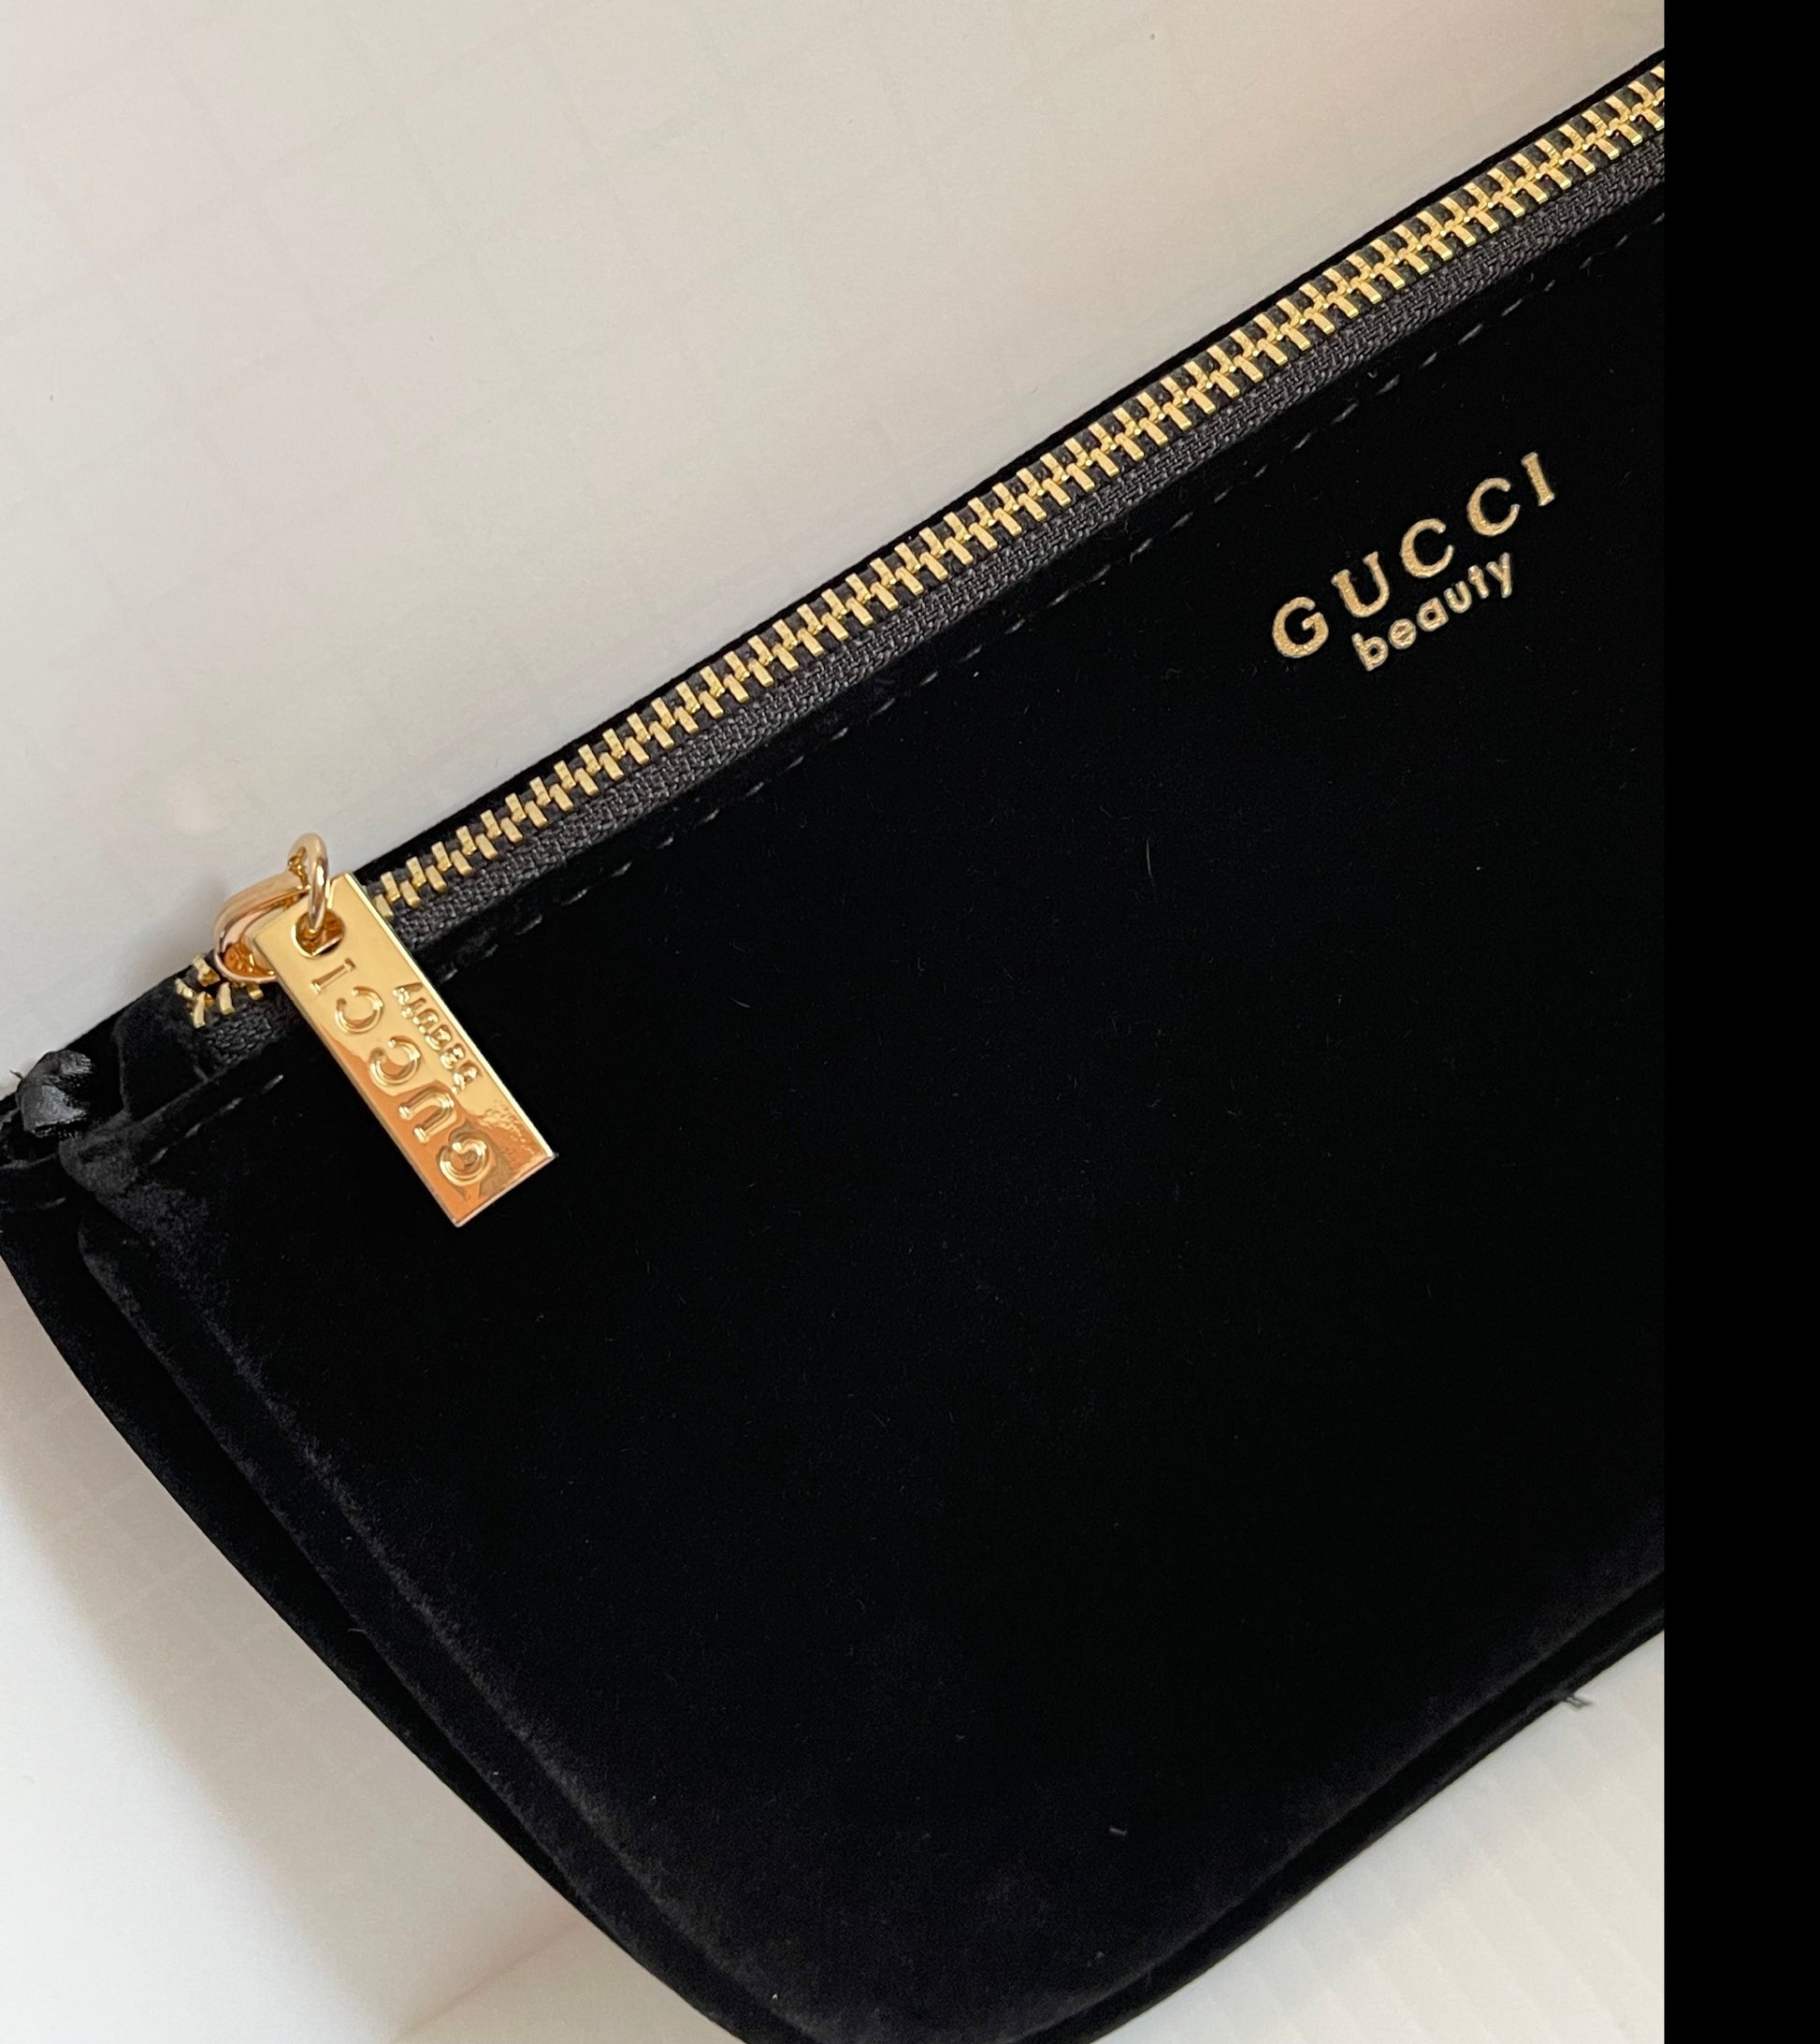 Gucci, Makeup, Black Velvet Gucci Beauty Makeup Bag